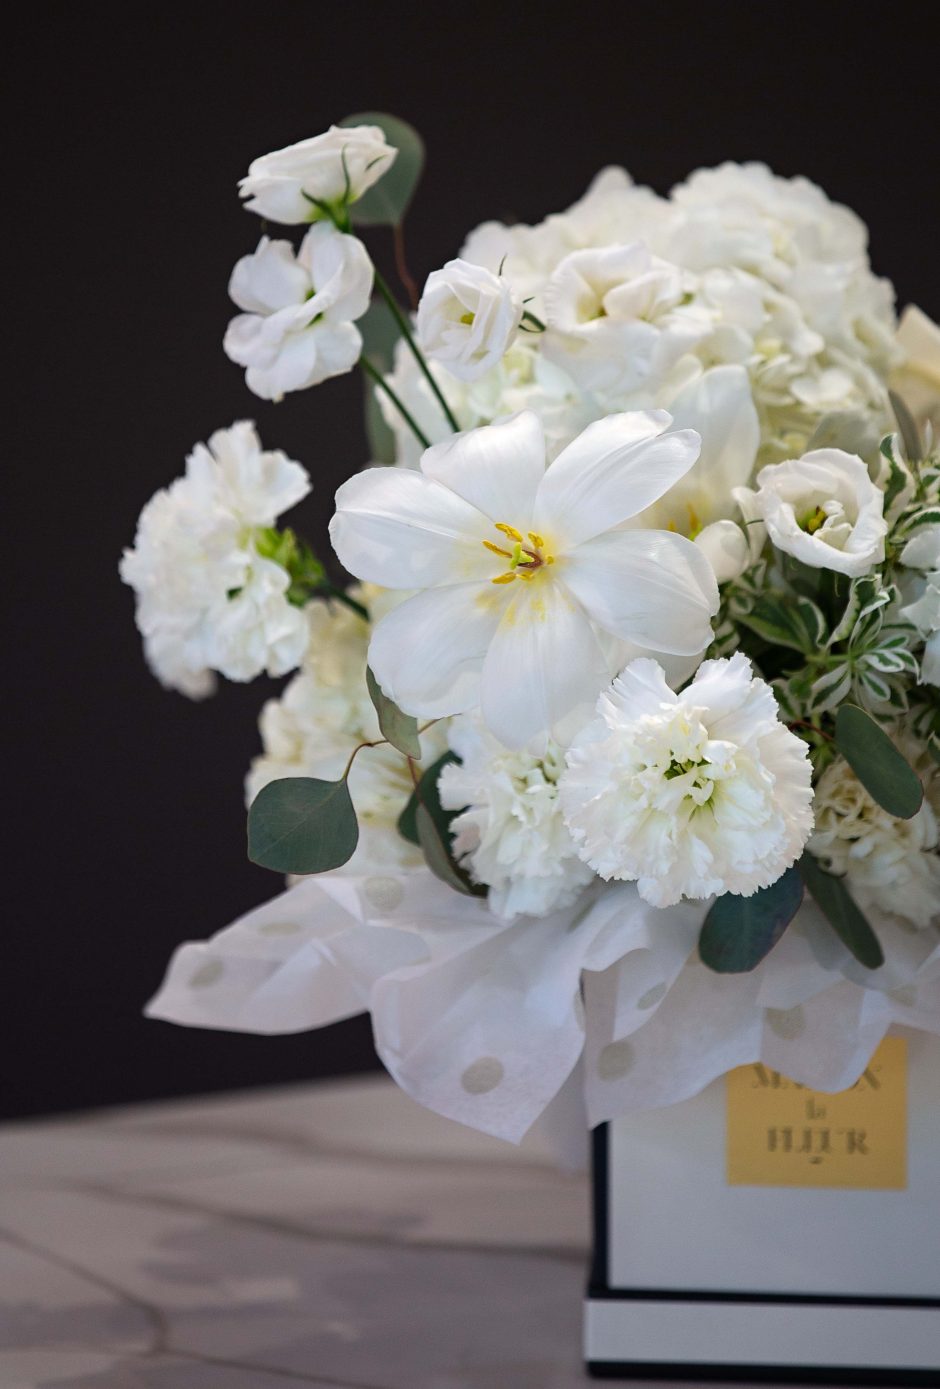 White Anemones Bouquet, Spring Awakening - Garden roses, anemones, lilac, long stem premium roses and eucalyptus